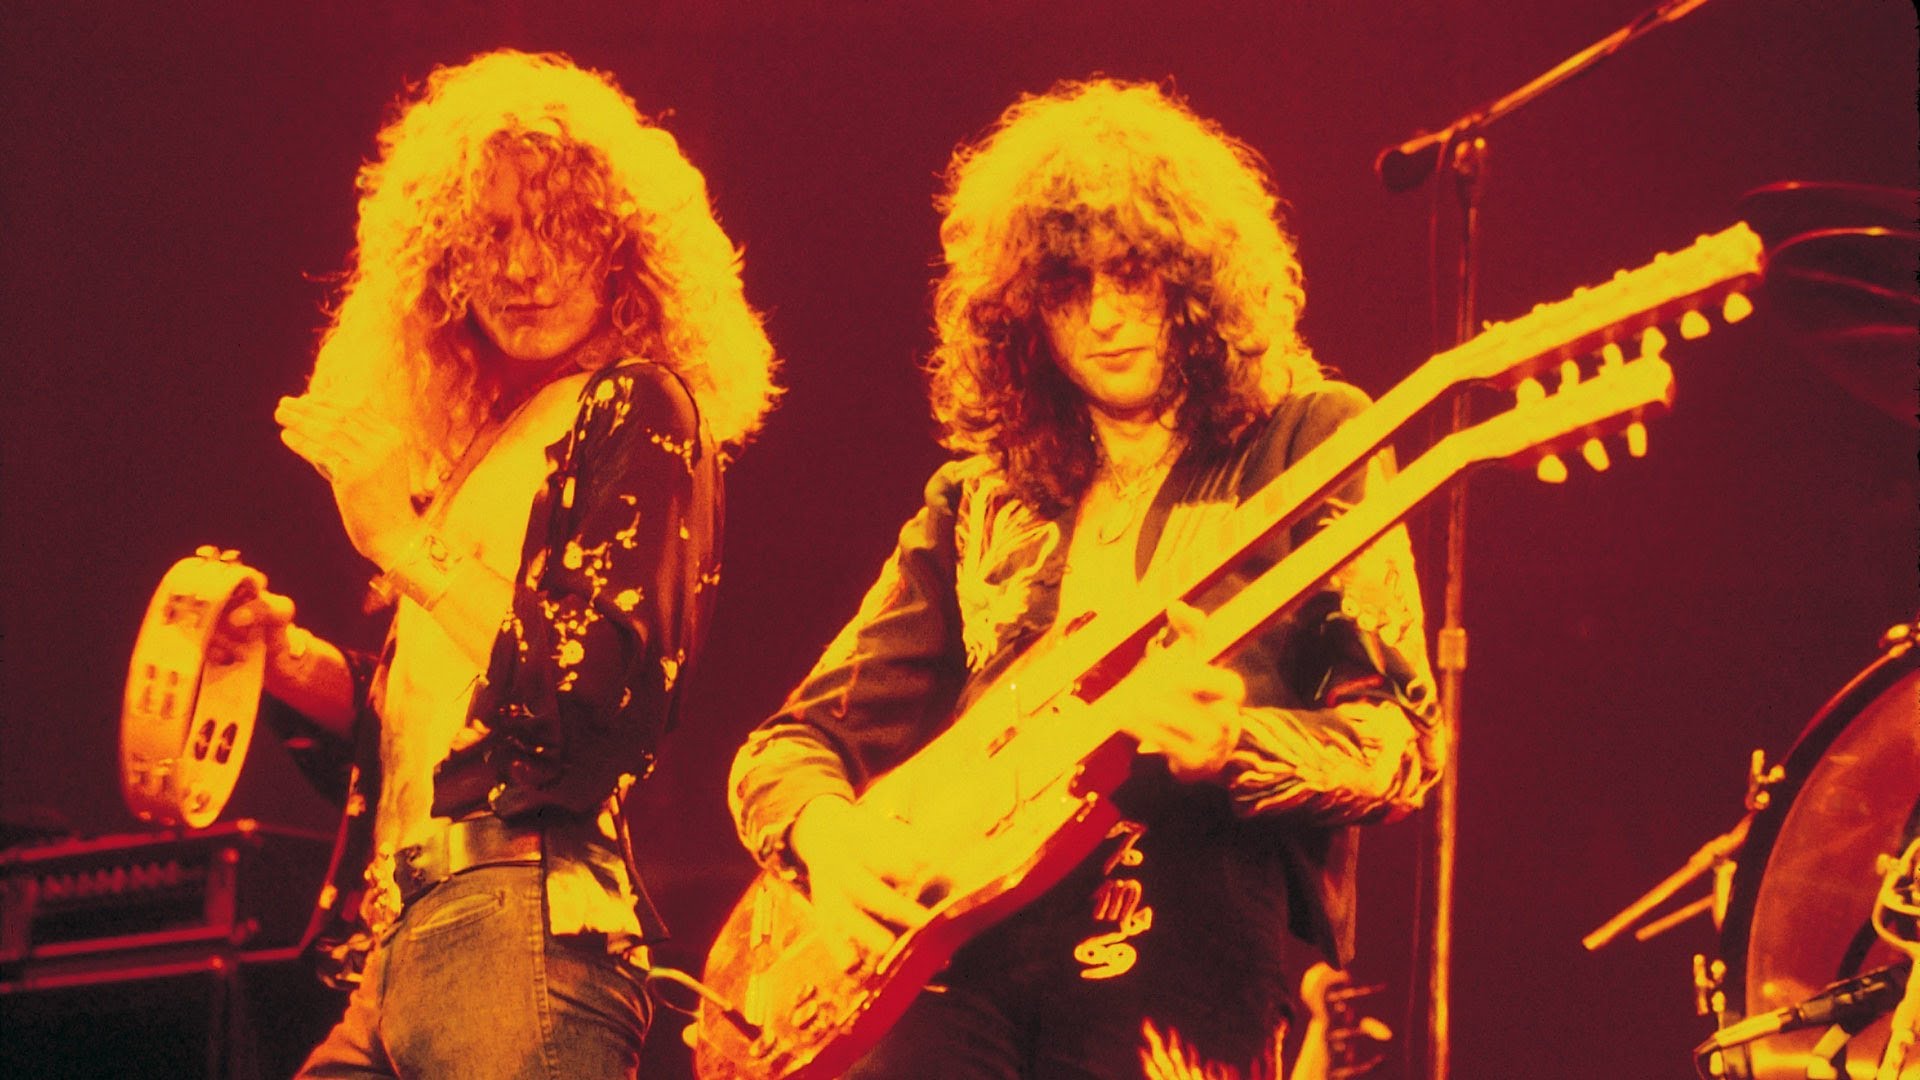 vedtage Whirlpool Dårlig faktor hennemusic: Led Zeppelin win appeal in Stairway To Heaven lawsuit